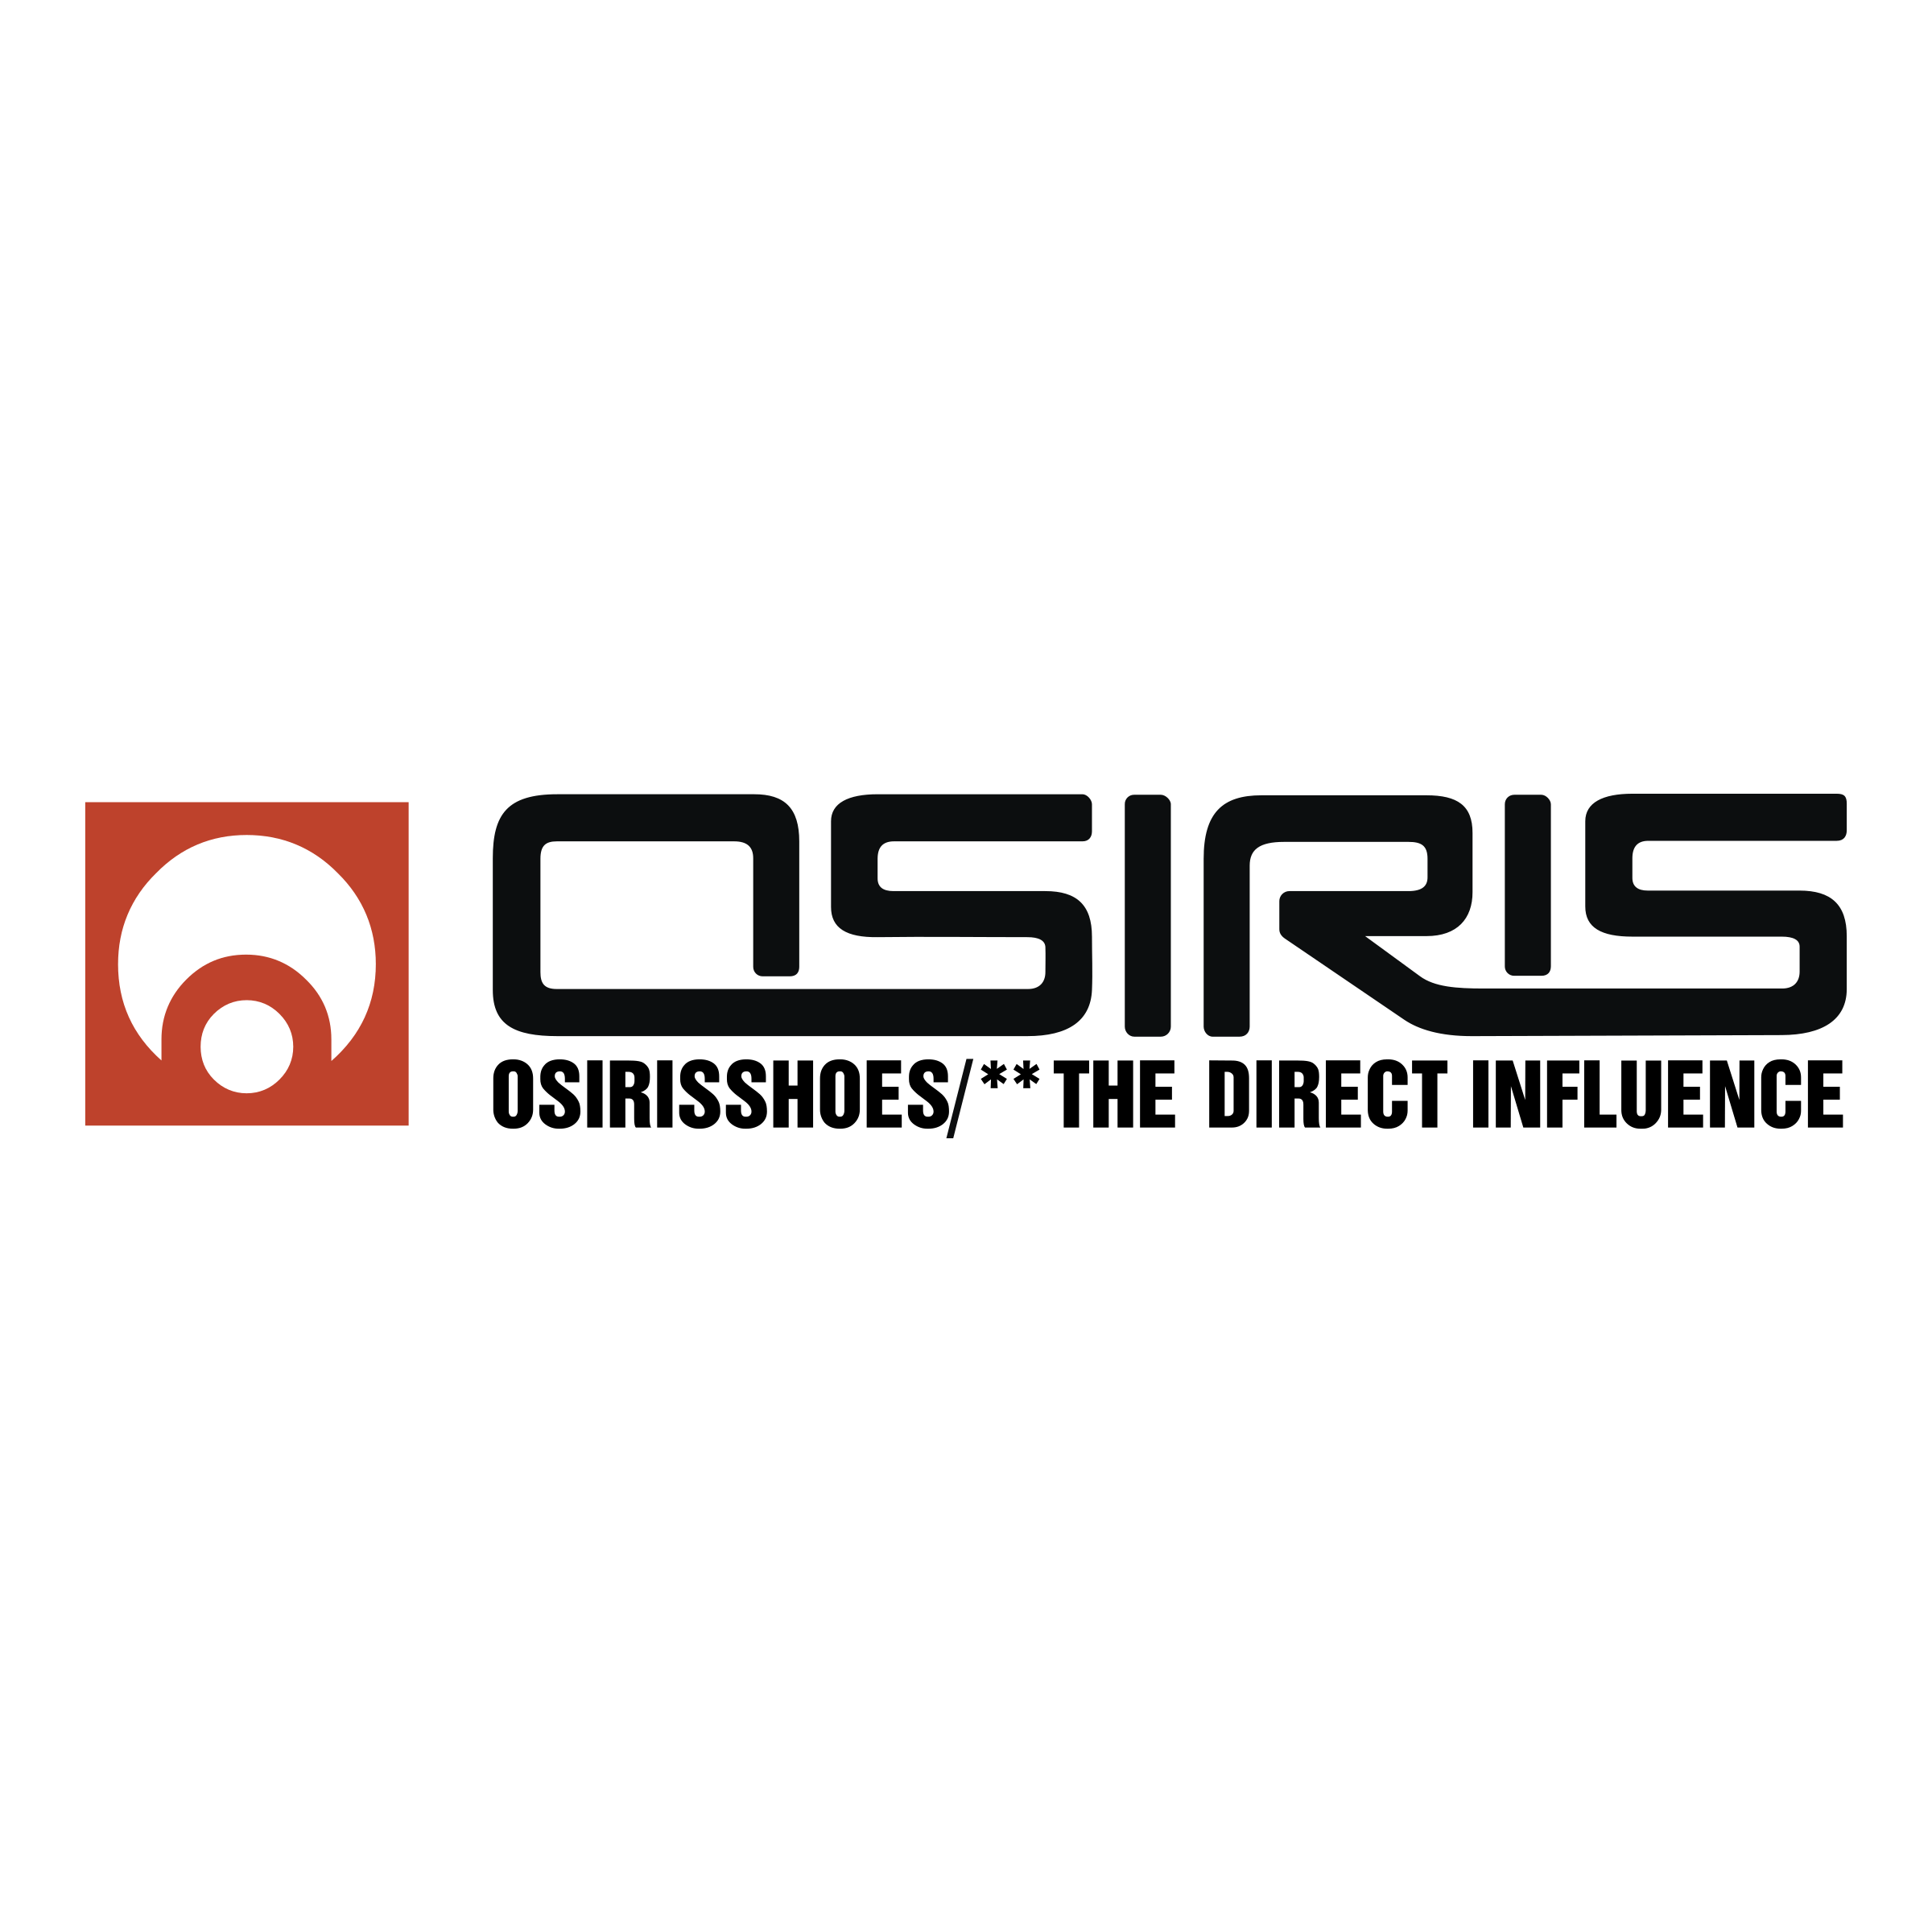 Osiris Shoes Logo - Osiris Shoes Logo PNG Transparent & SVG Vector - Freebie Supply